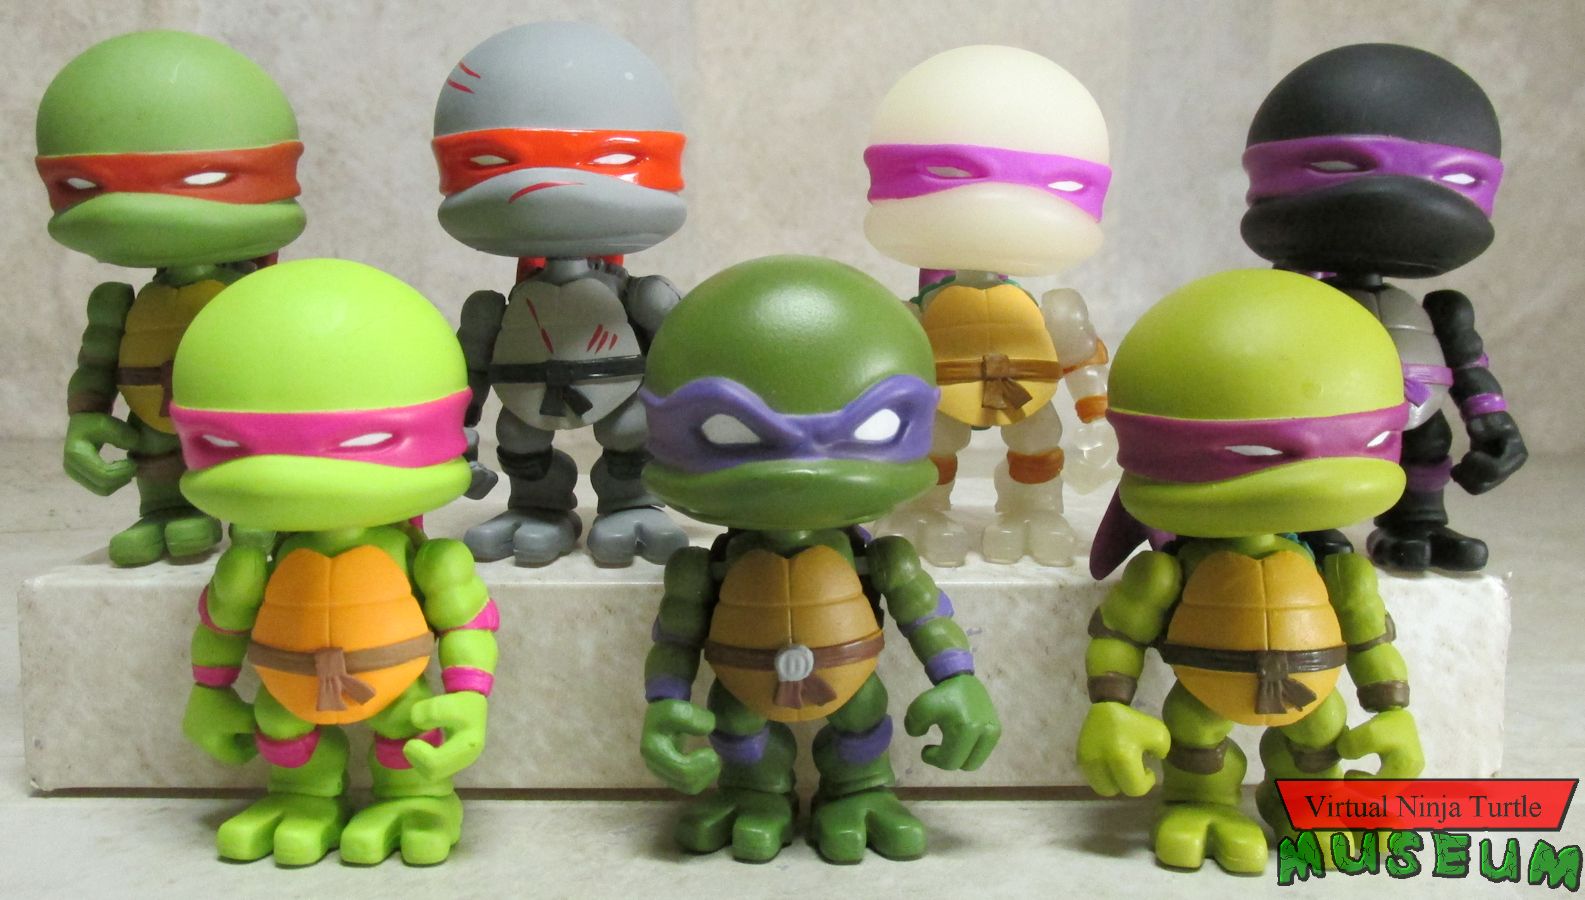 All Donatellos